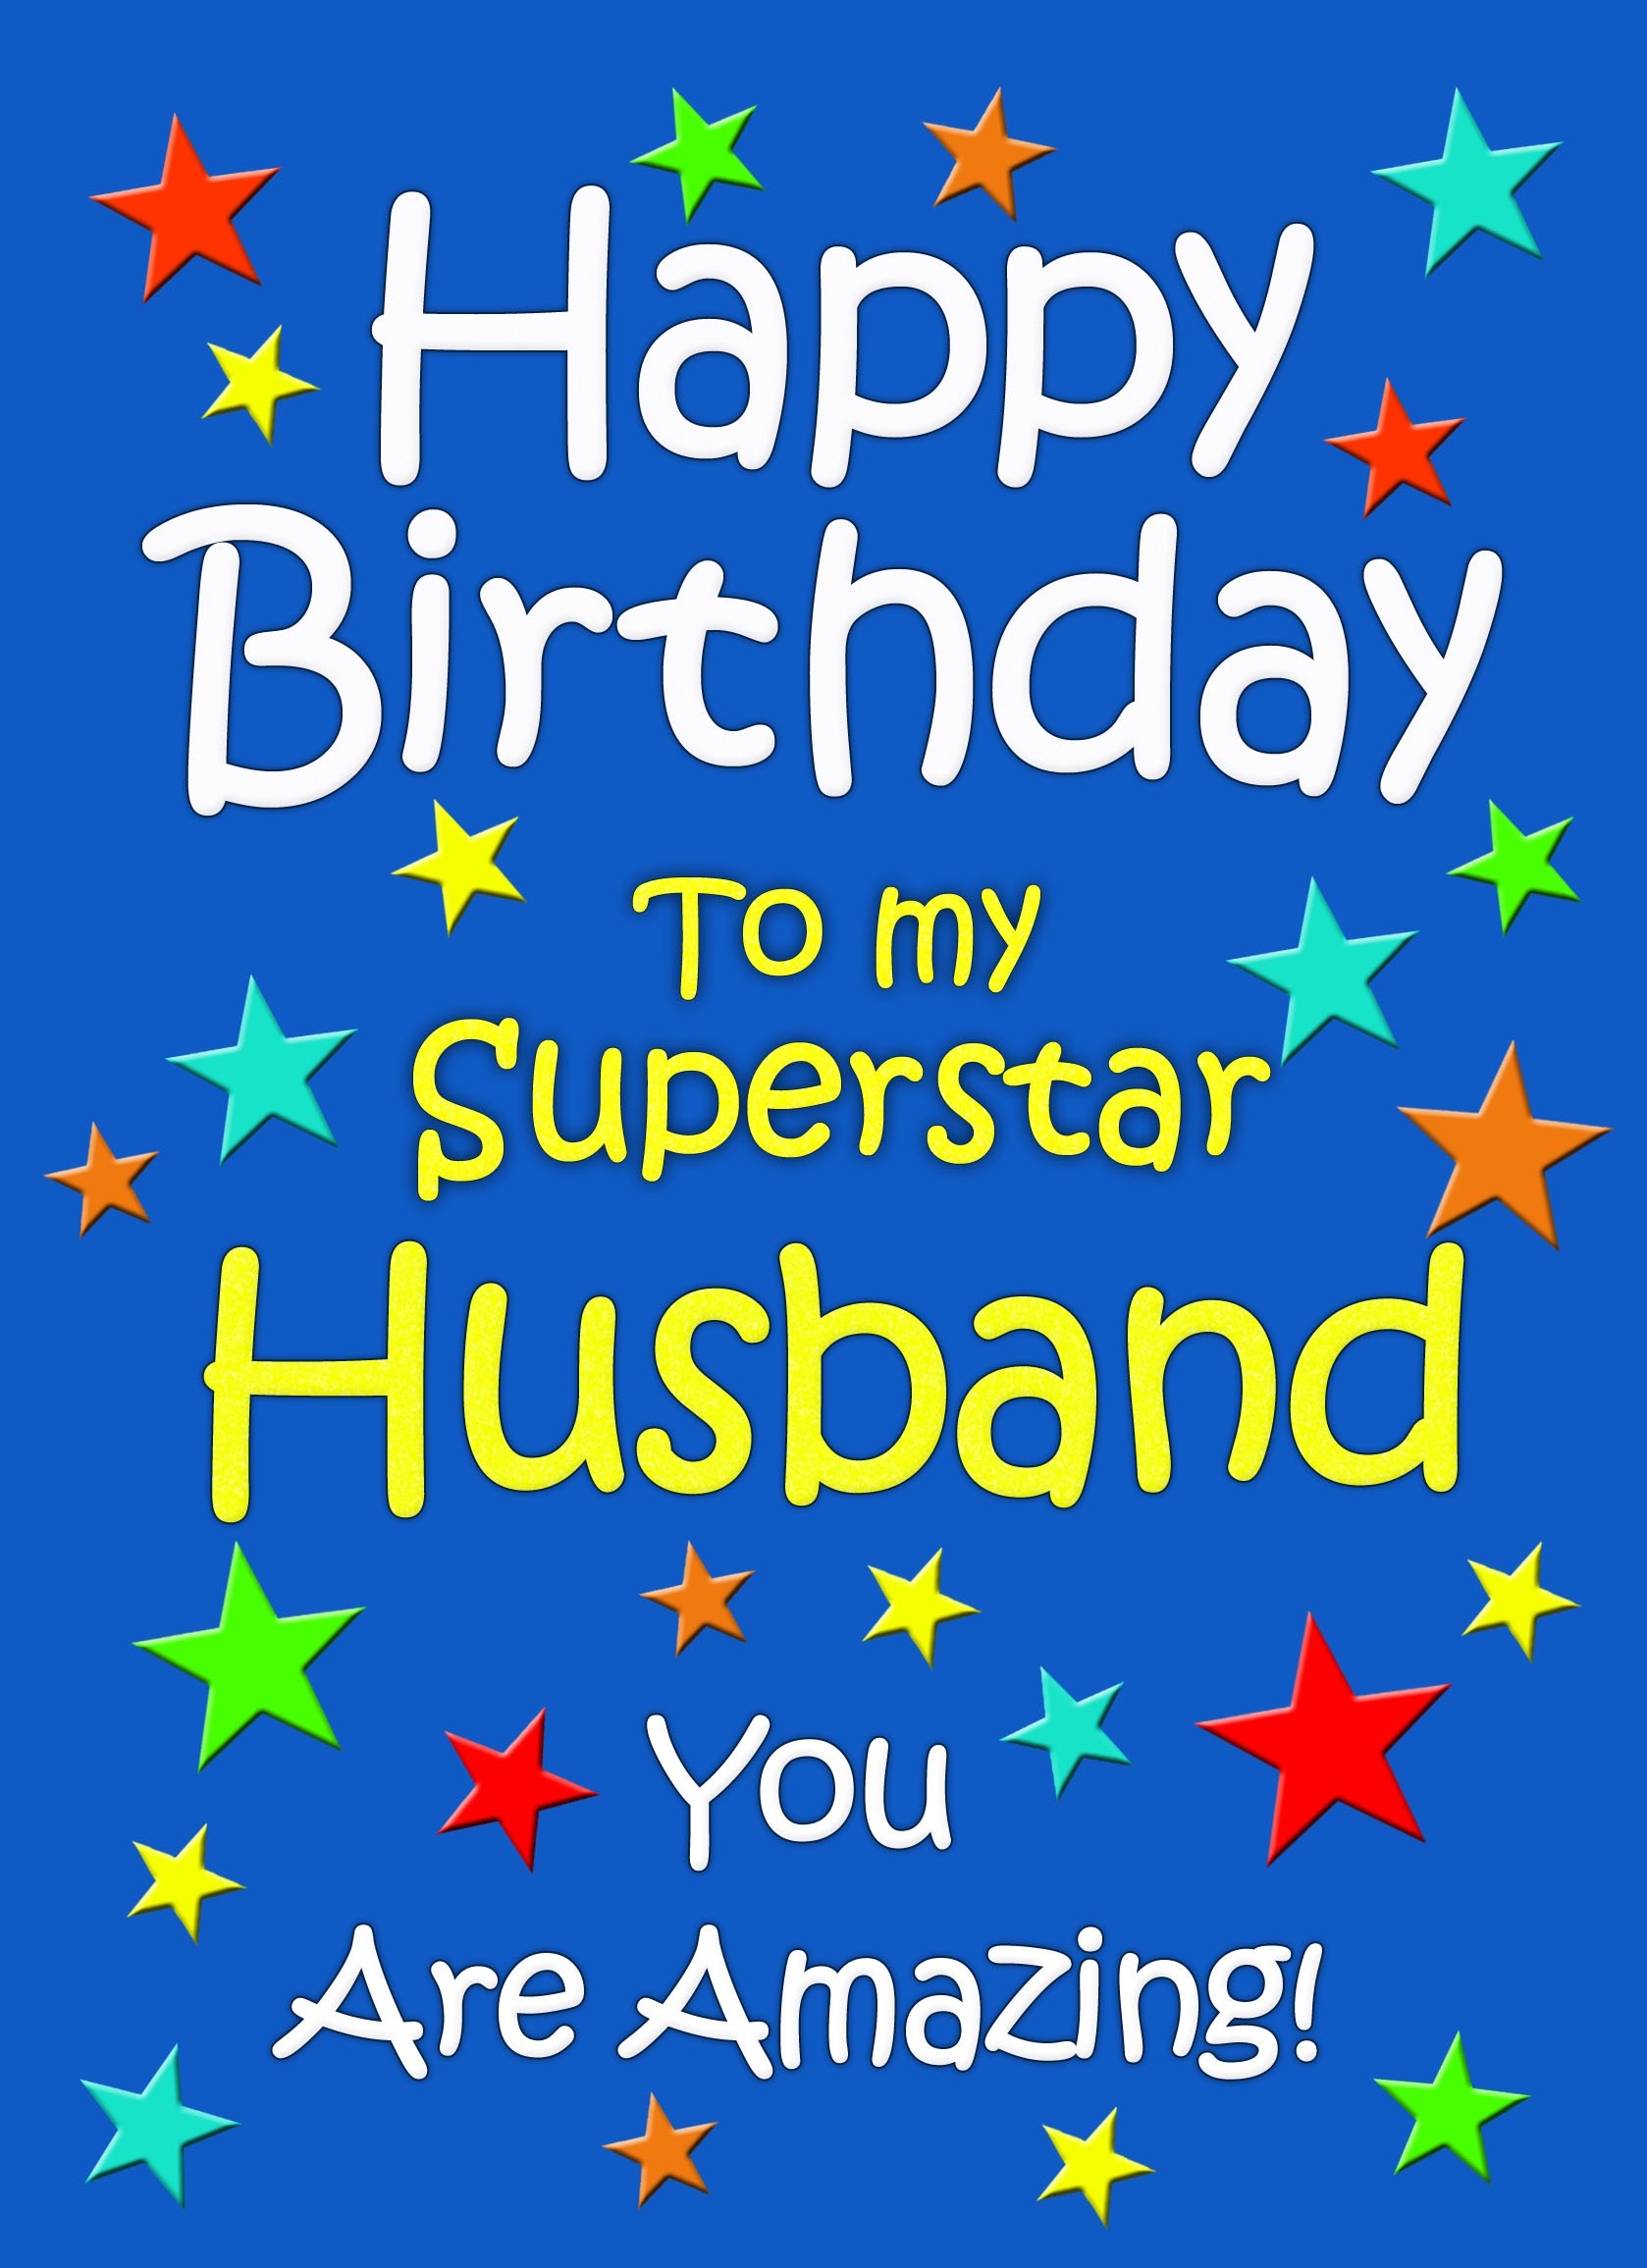 Husband Birthday Card (Blue)